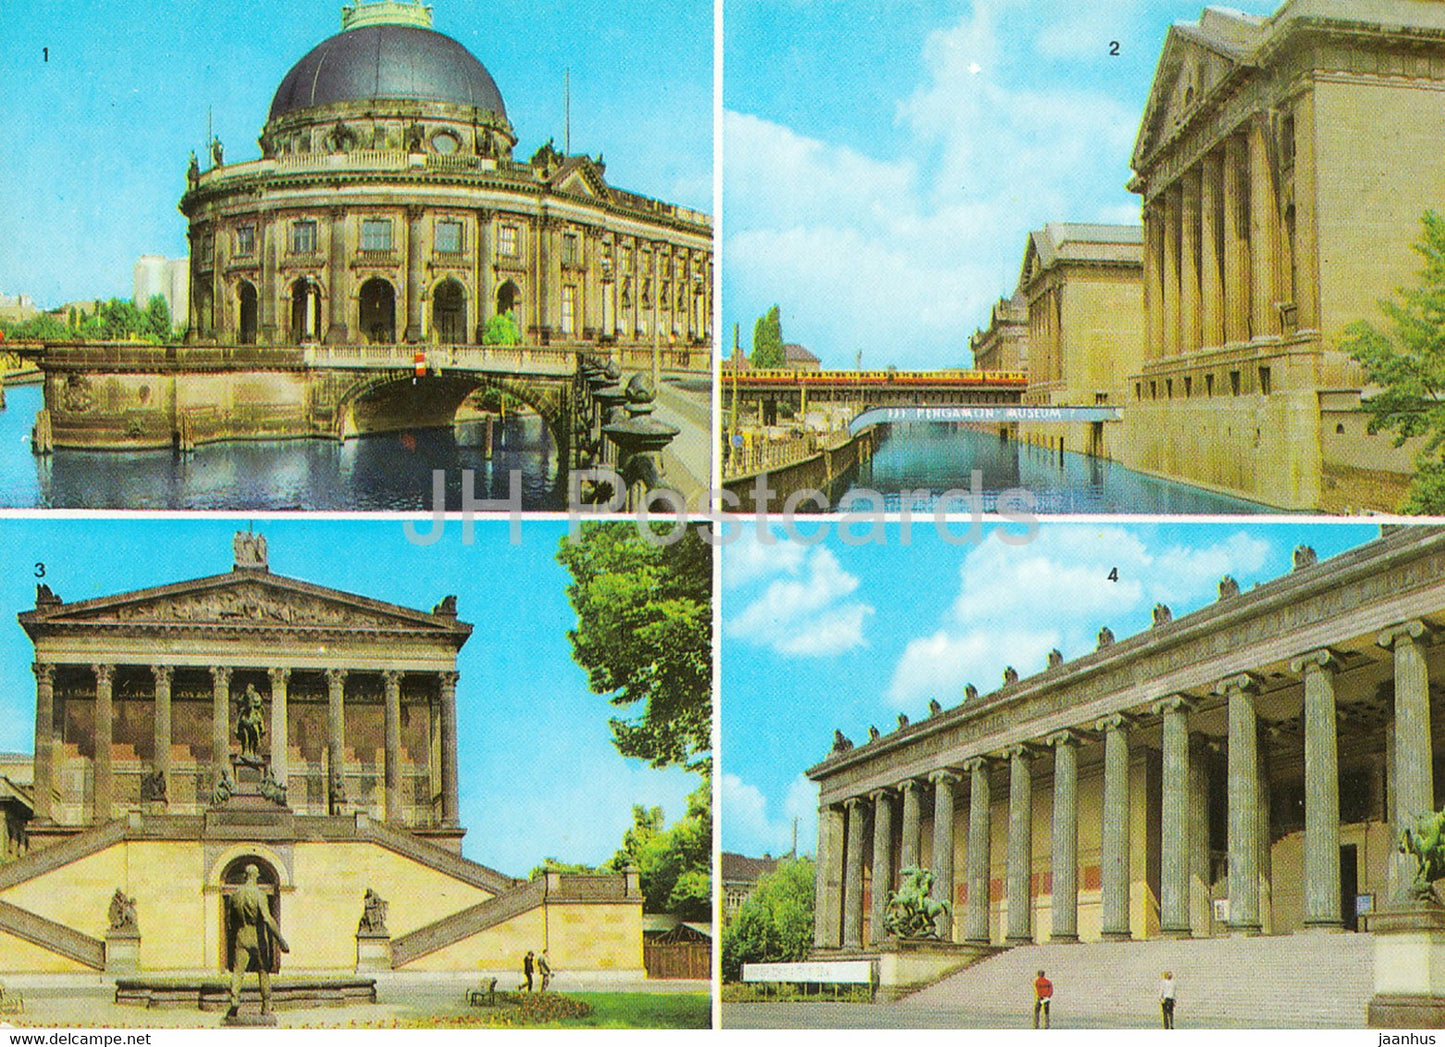 Berlin - Hauptstadt der DDR - Bode Museum - Pergamon Museum - National Galerie - Altes Museum - Germany DDR - unused - JH Postcards